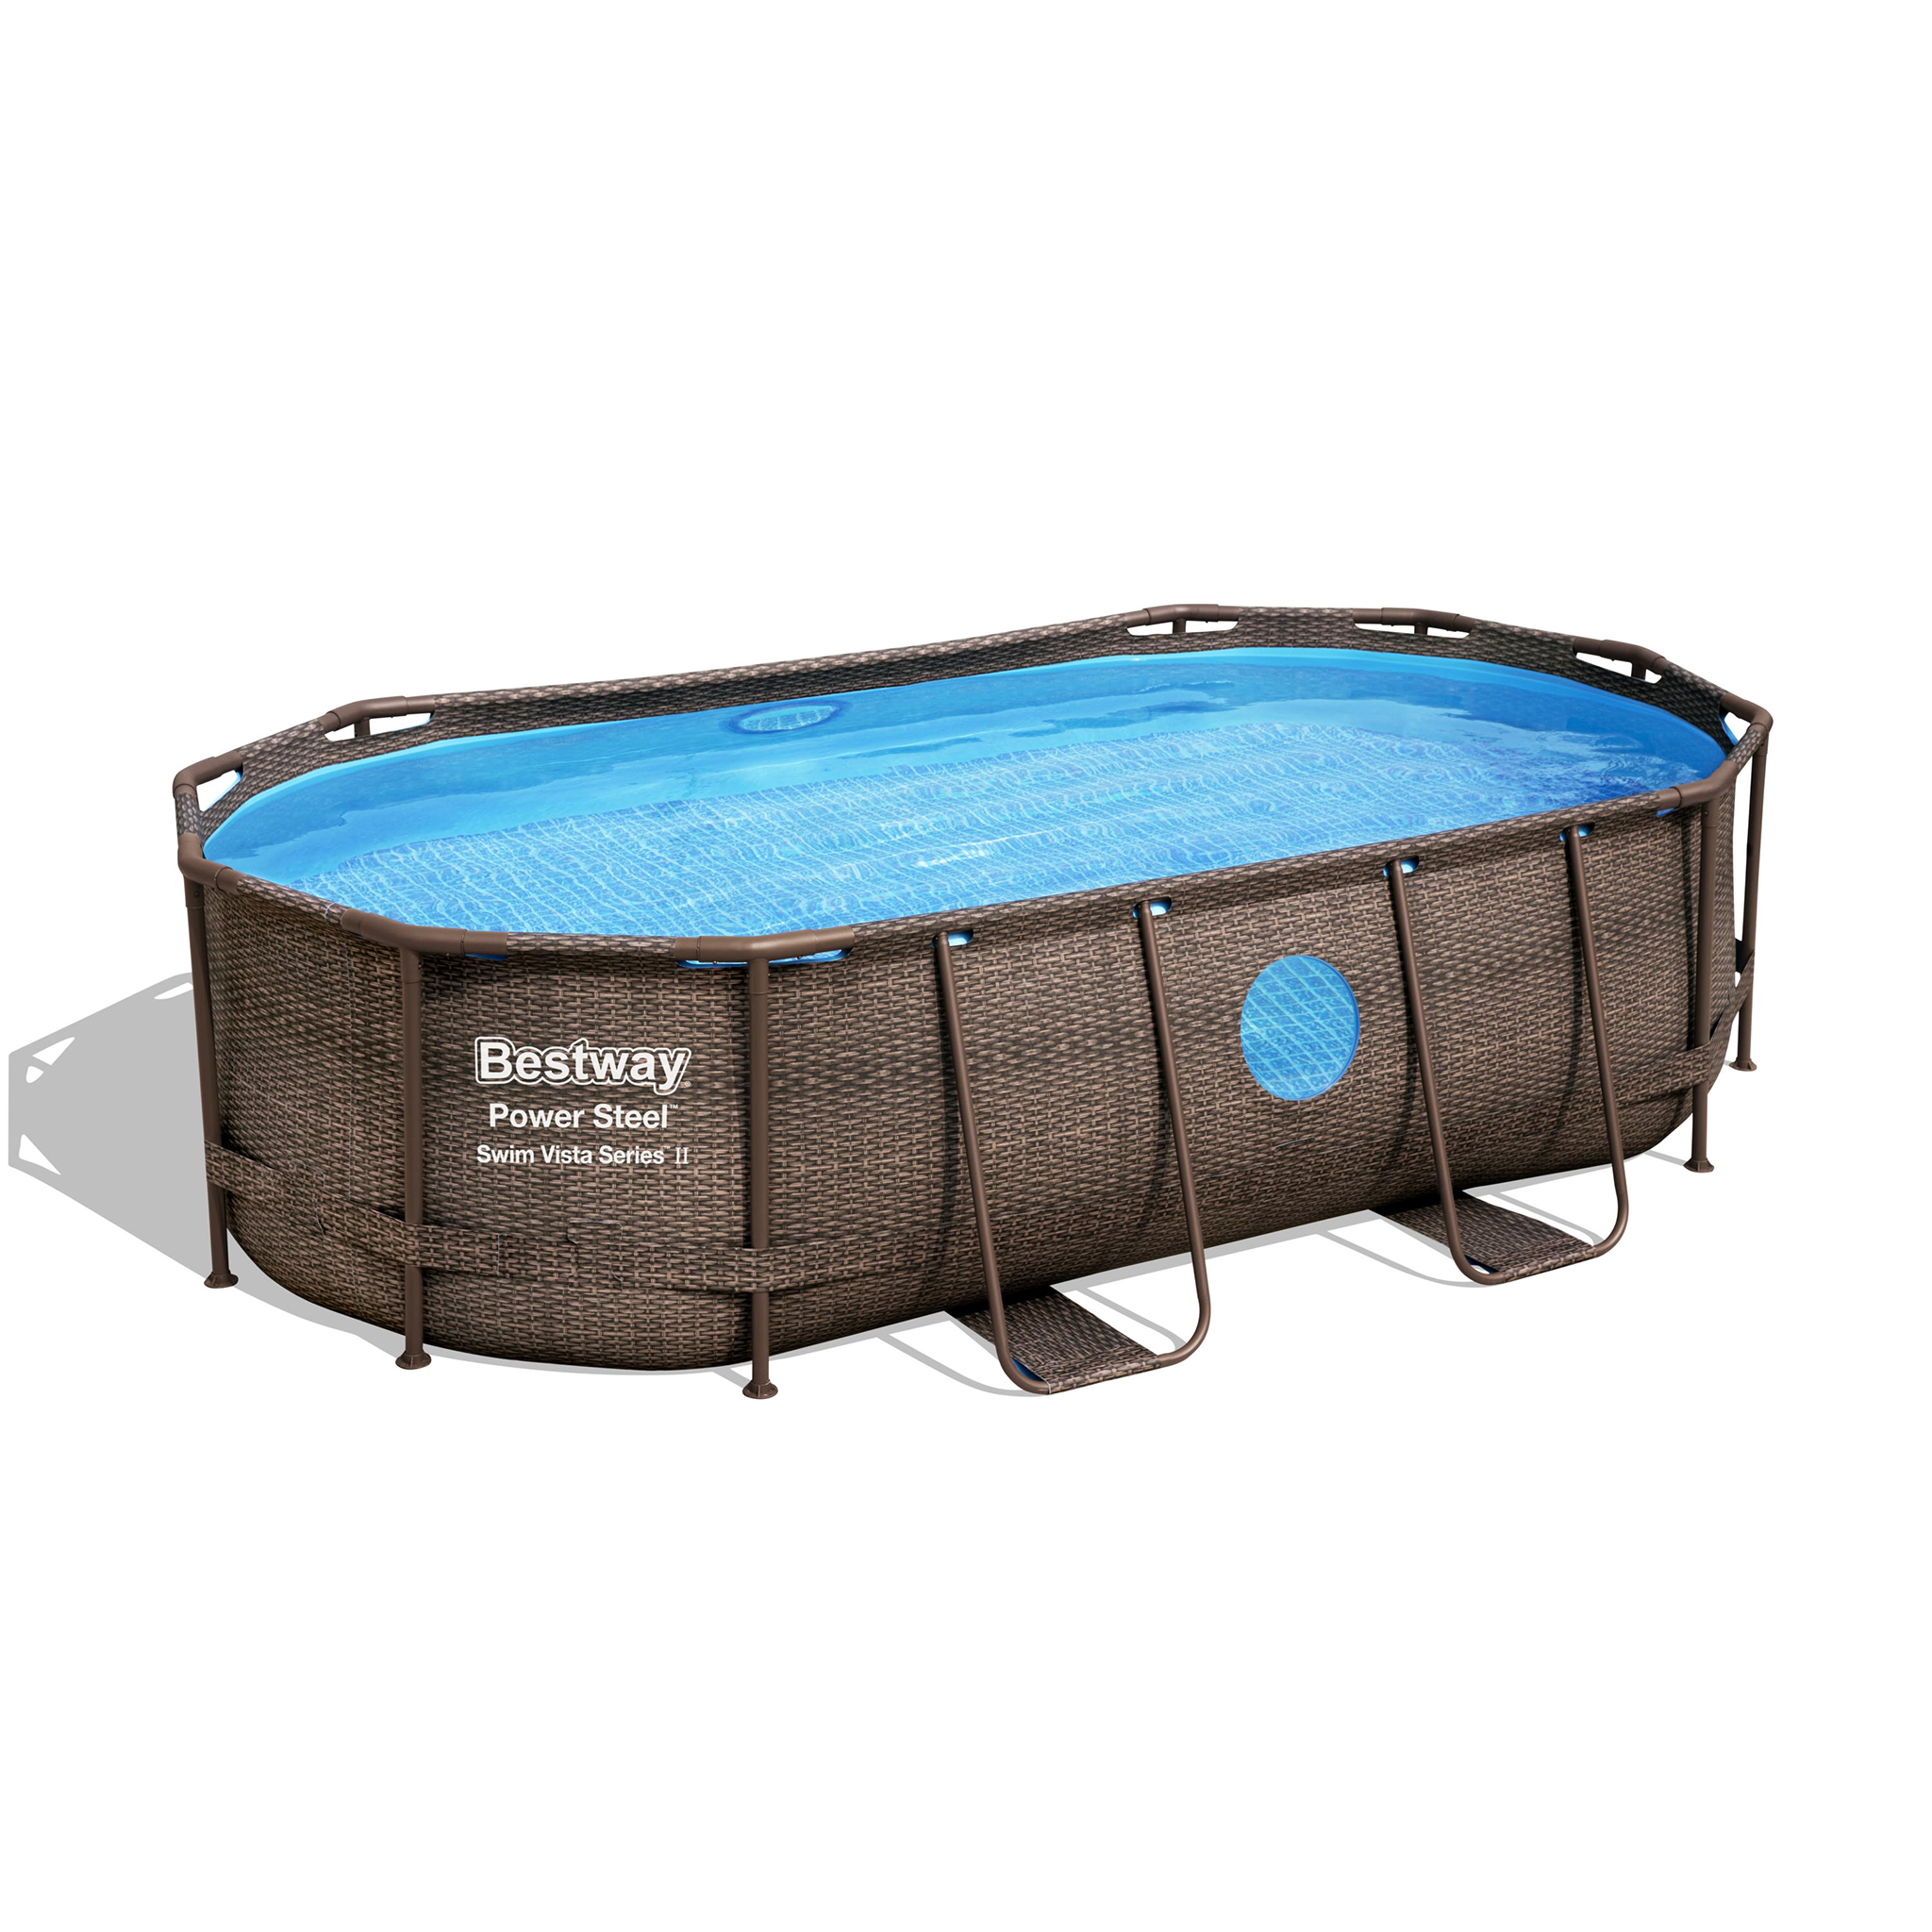 Produktfoto för Bestway pool ovan mark 4,27x2,5m | Power Steel Swim Vista II (56714)